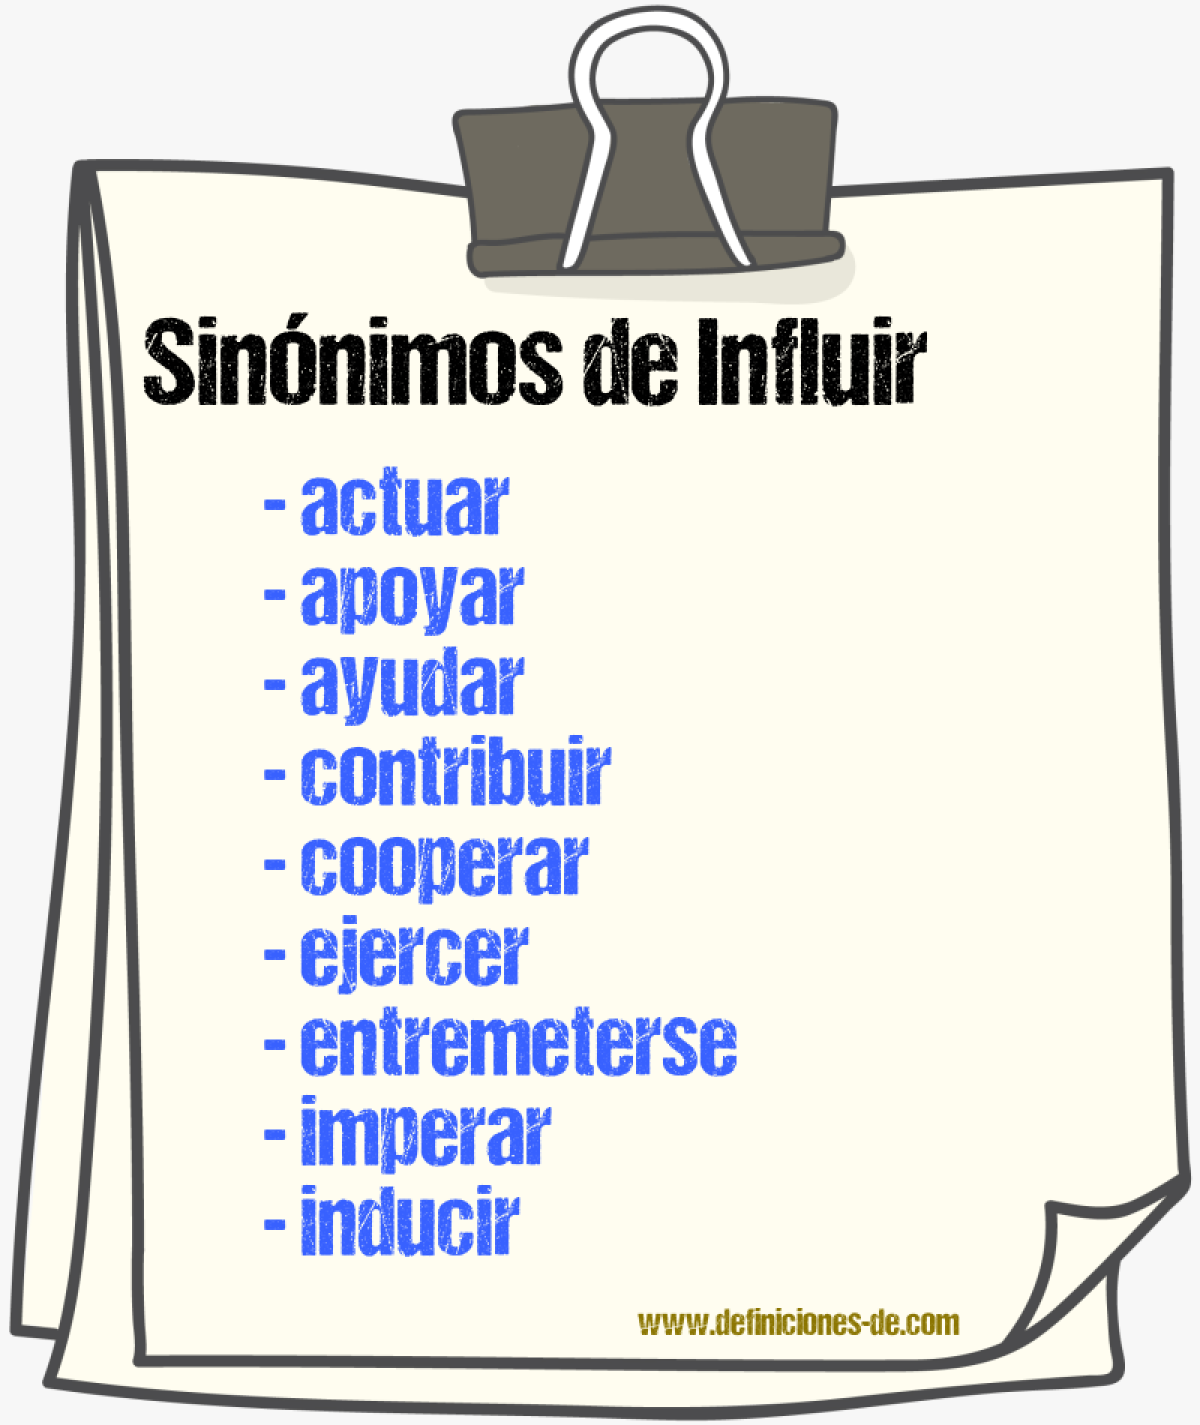 Sinónimos de influir